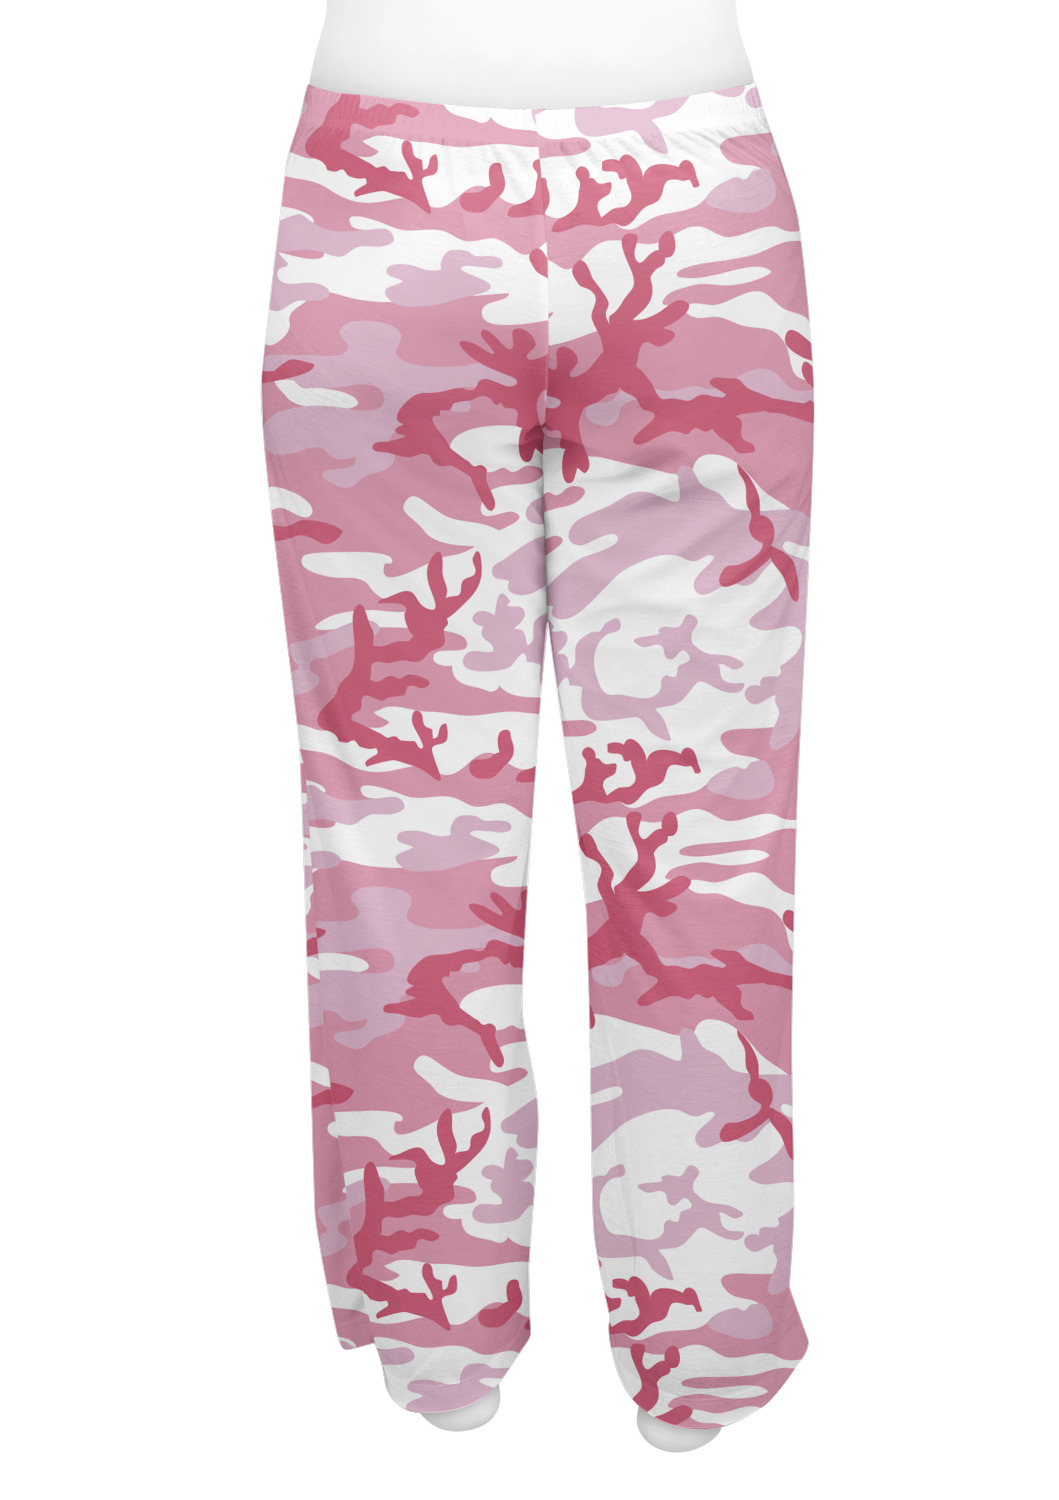 Pink Camo Womens Pajama Pants - M (Personalized) - YouCustomizeIt